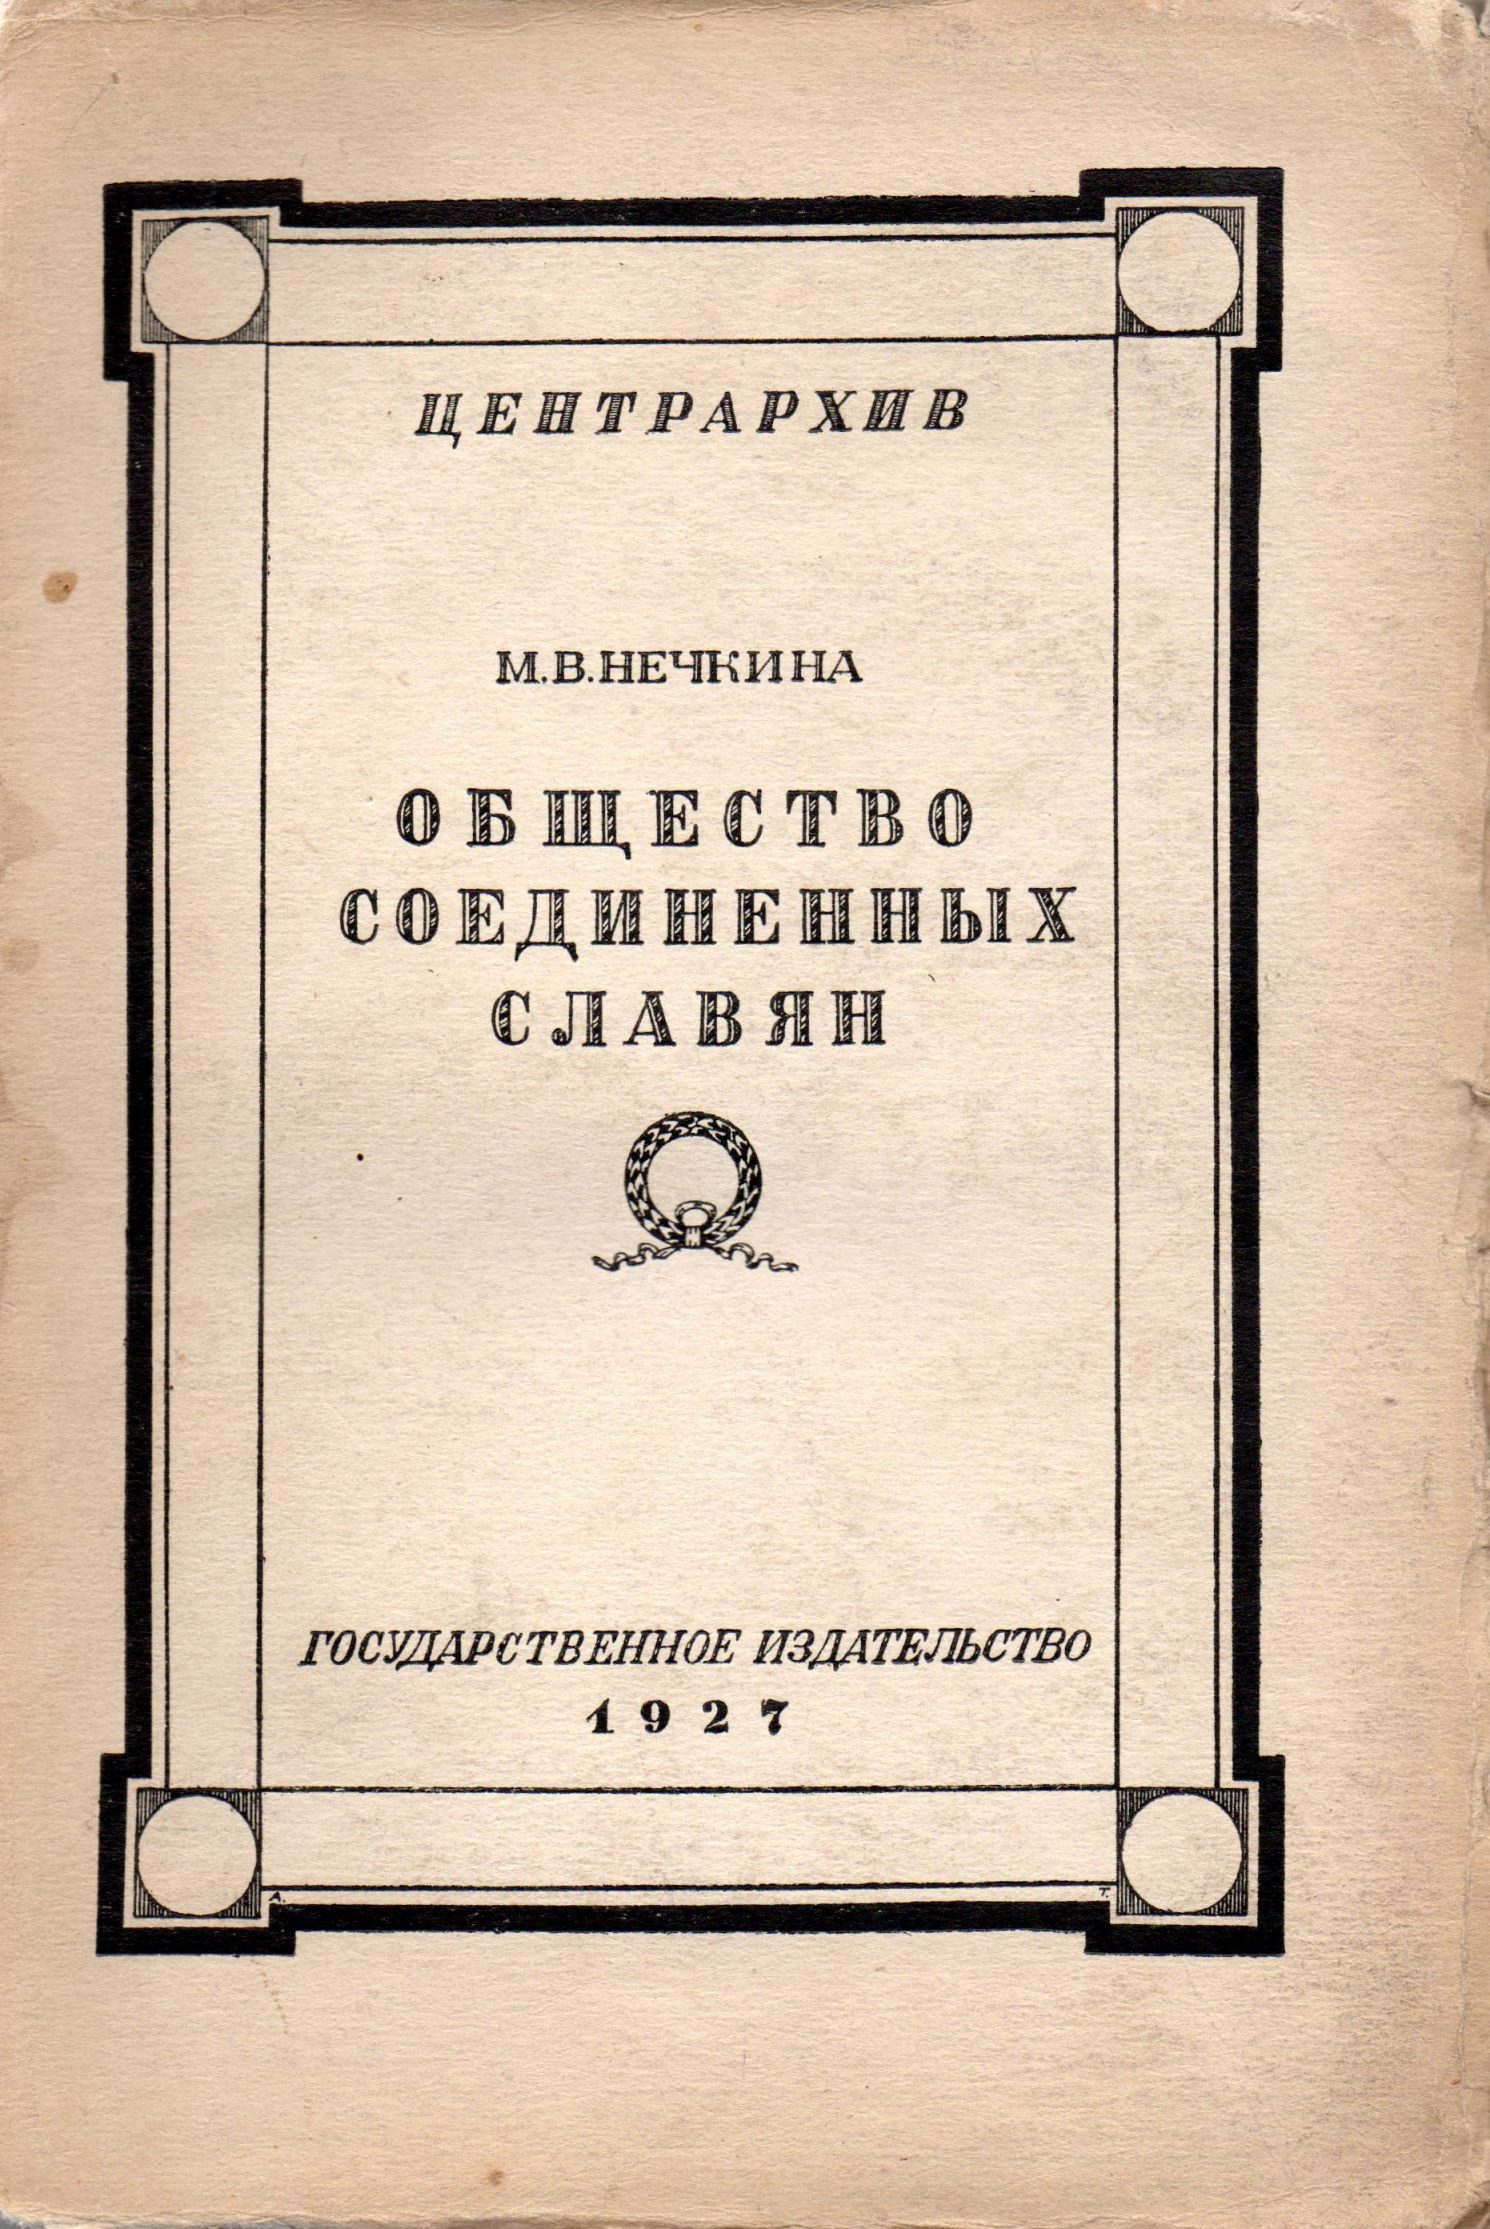 Книга "Нечкина М. В. "Общество соединенных славян"